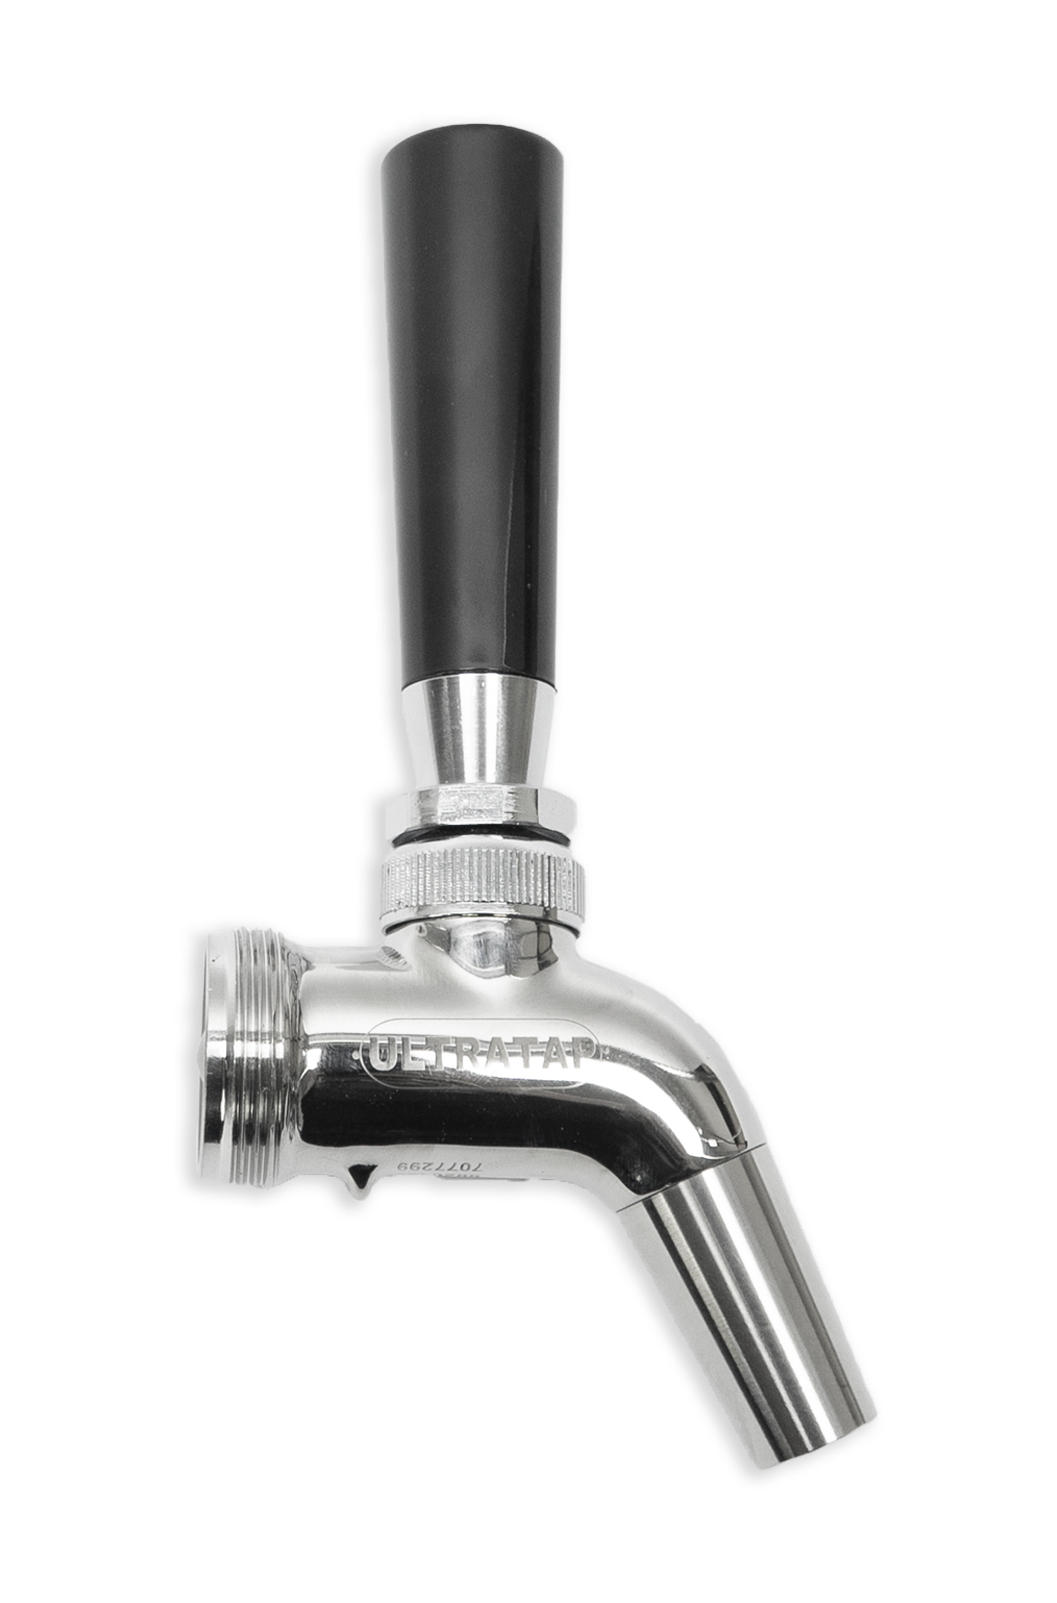 Photo of UltraTap beer tap